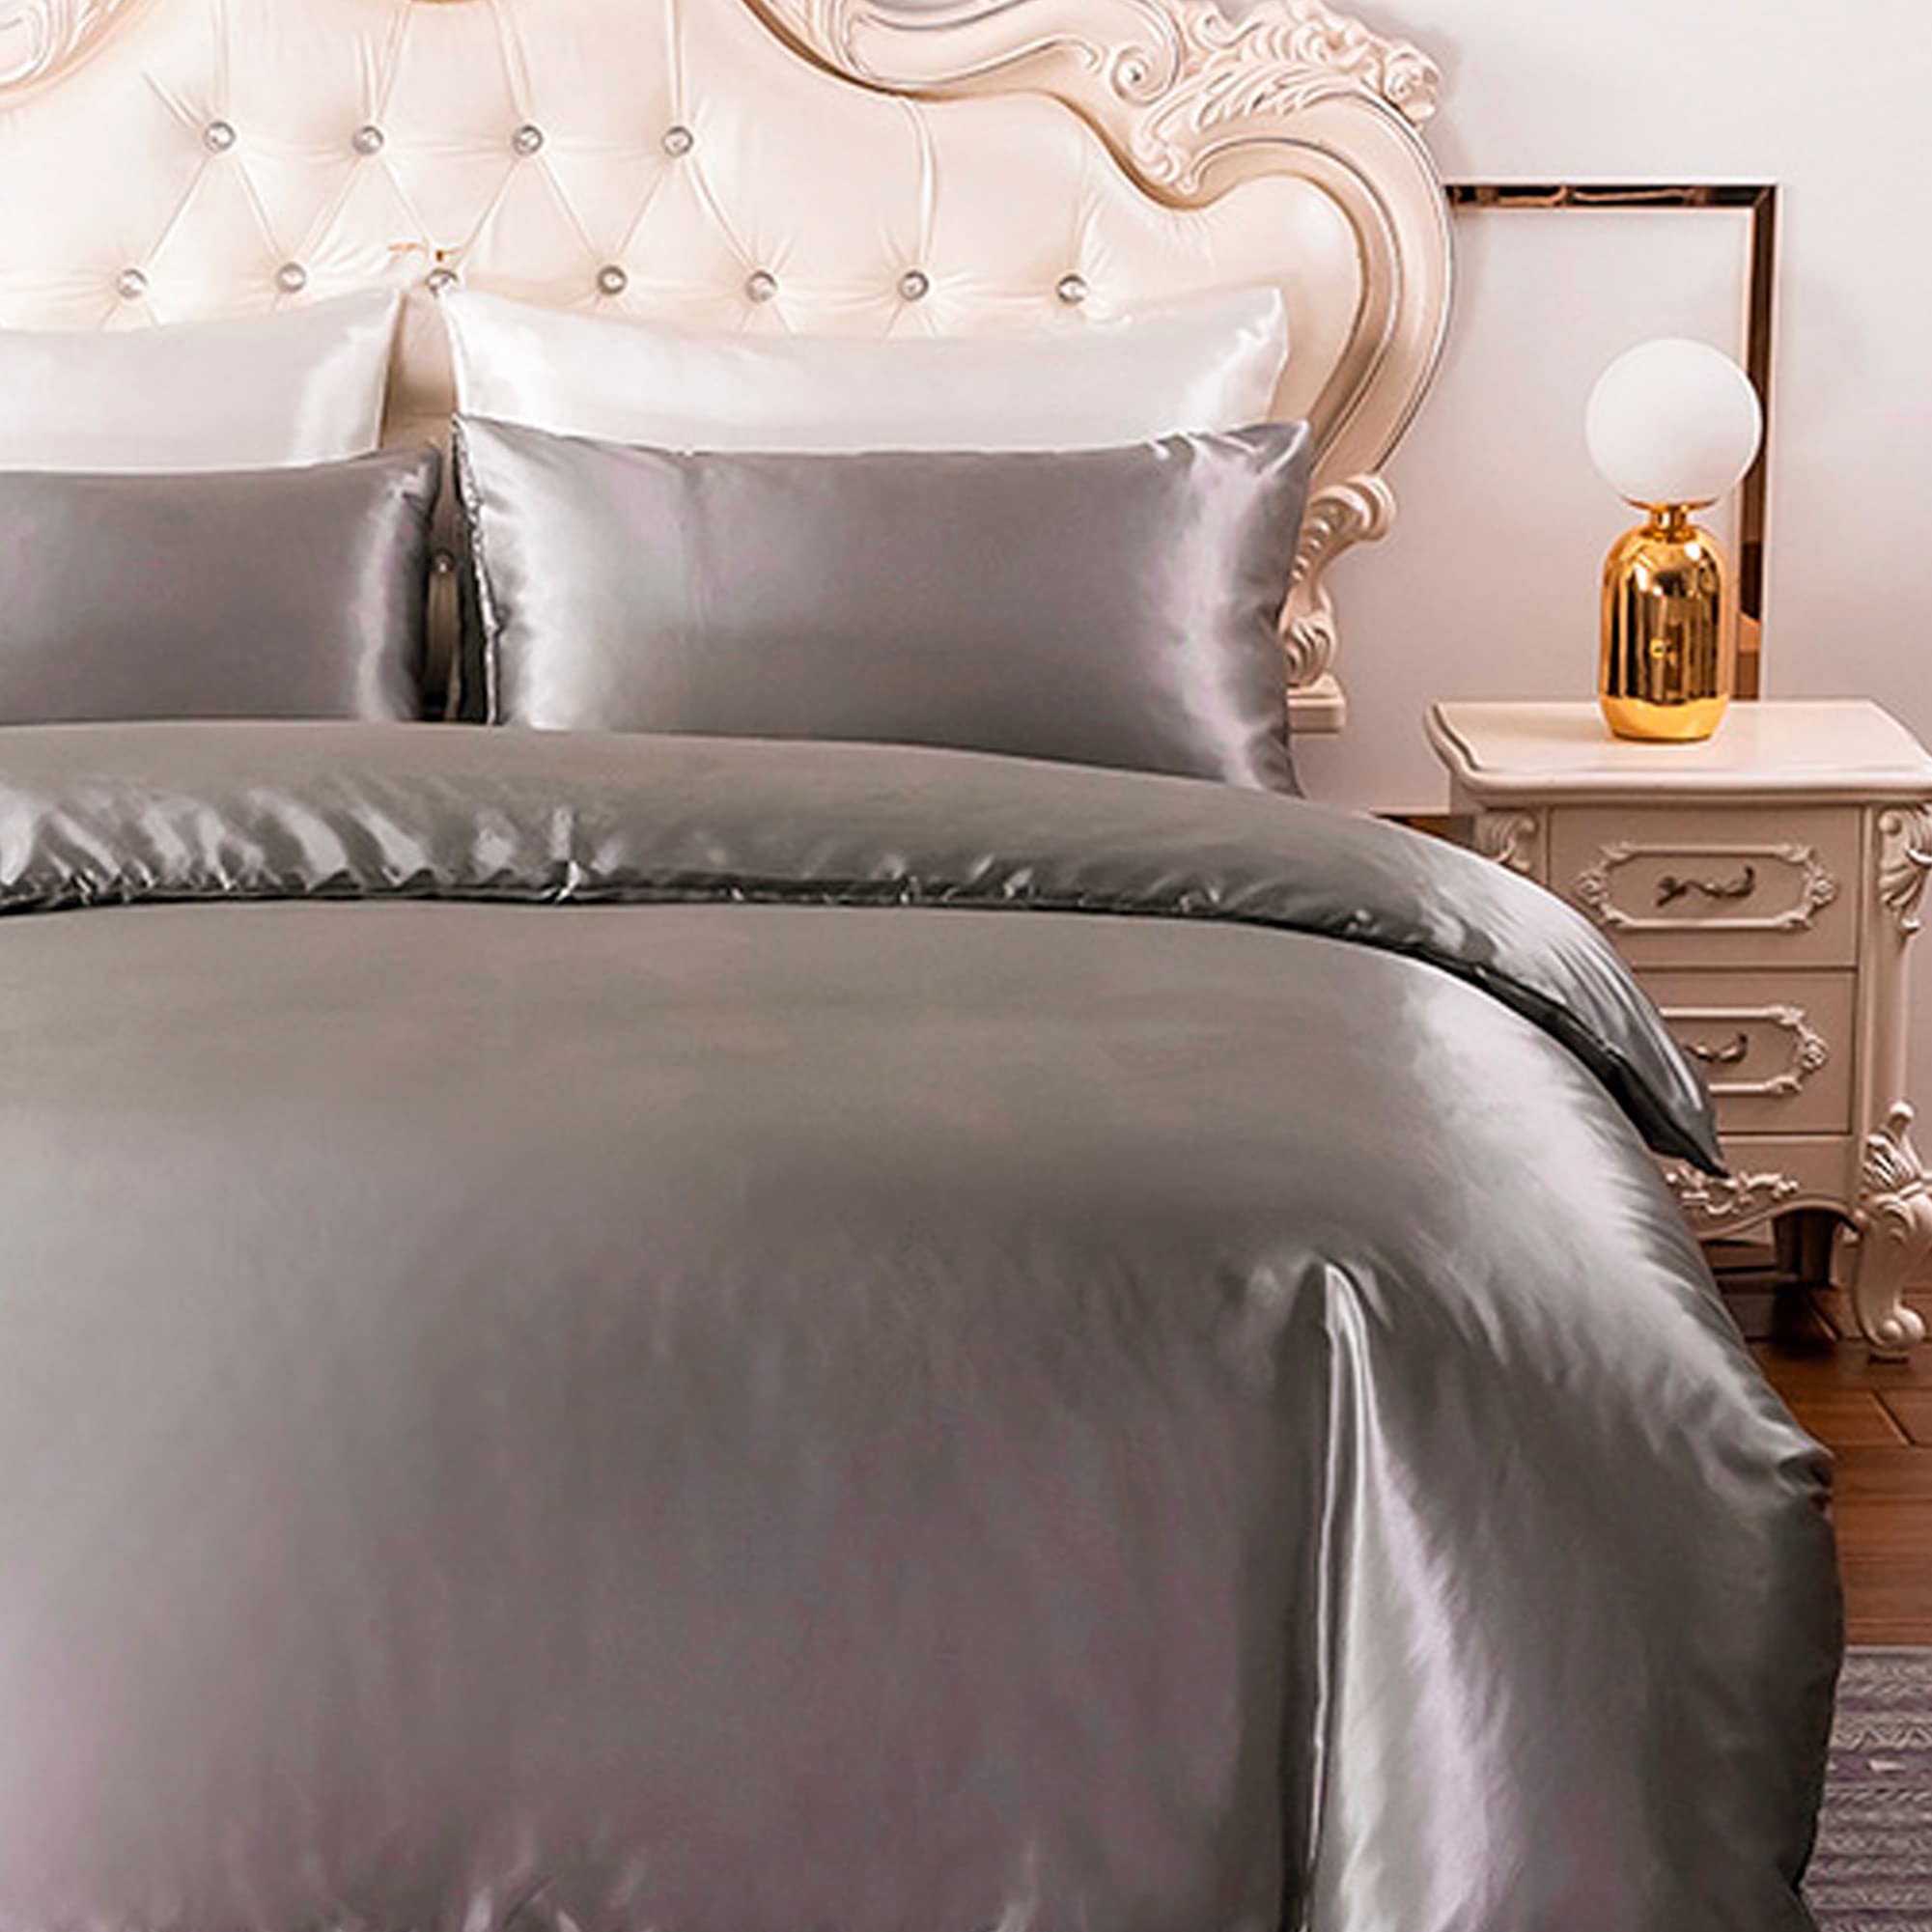 HYSENM Satin Bettwäsche 220 x 230 cm Seide Luxus Bettbezug Set Microfaser Bettbezug+ 2 Kissenhülle 50 x 70 cm einfarbig glatt bequem elegant, Grau